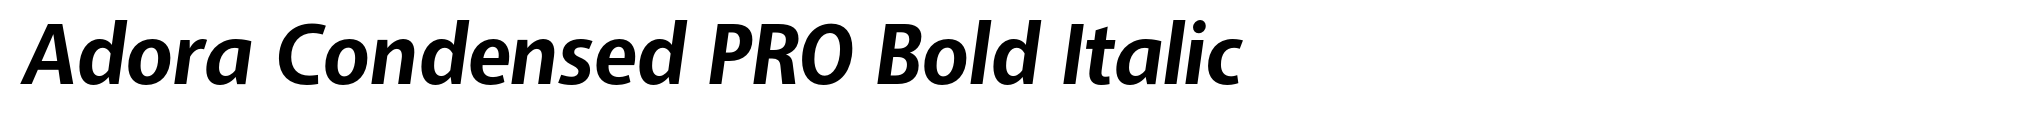 Adora Condensed PRO Bold Italic image